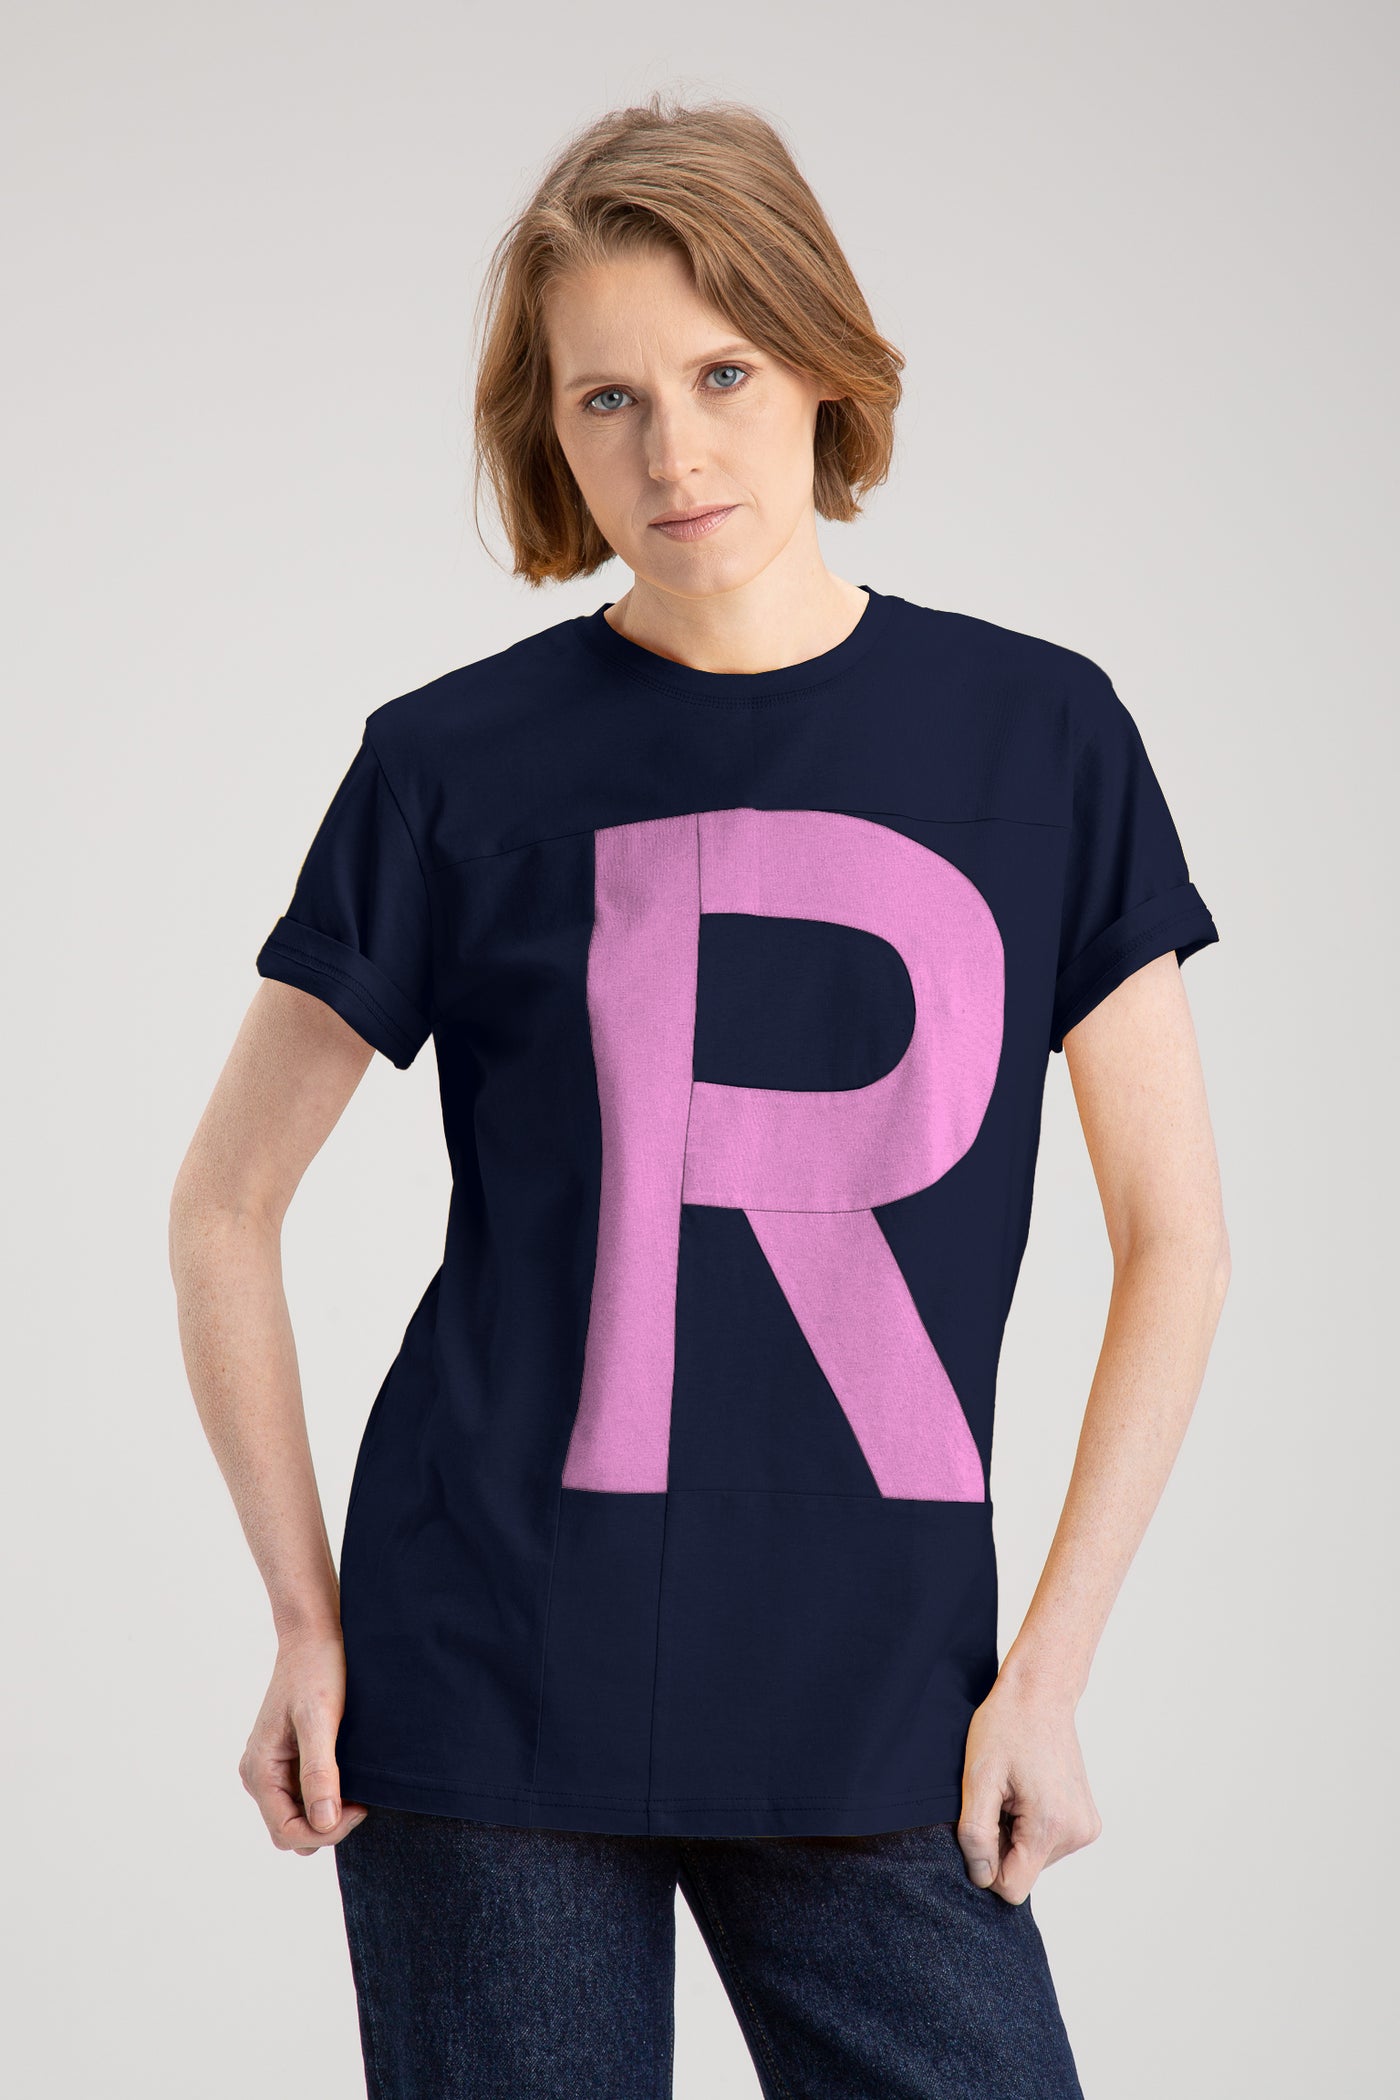 Naiste up-shirt, R motiiviga | Sinine, roosa